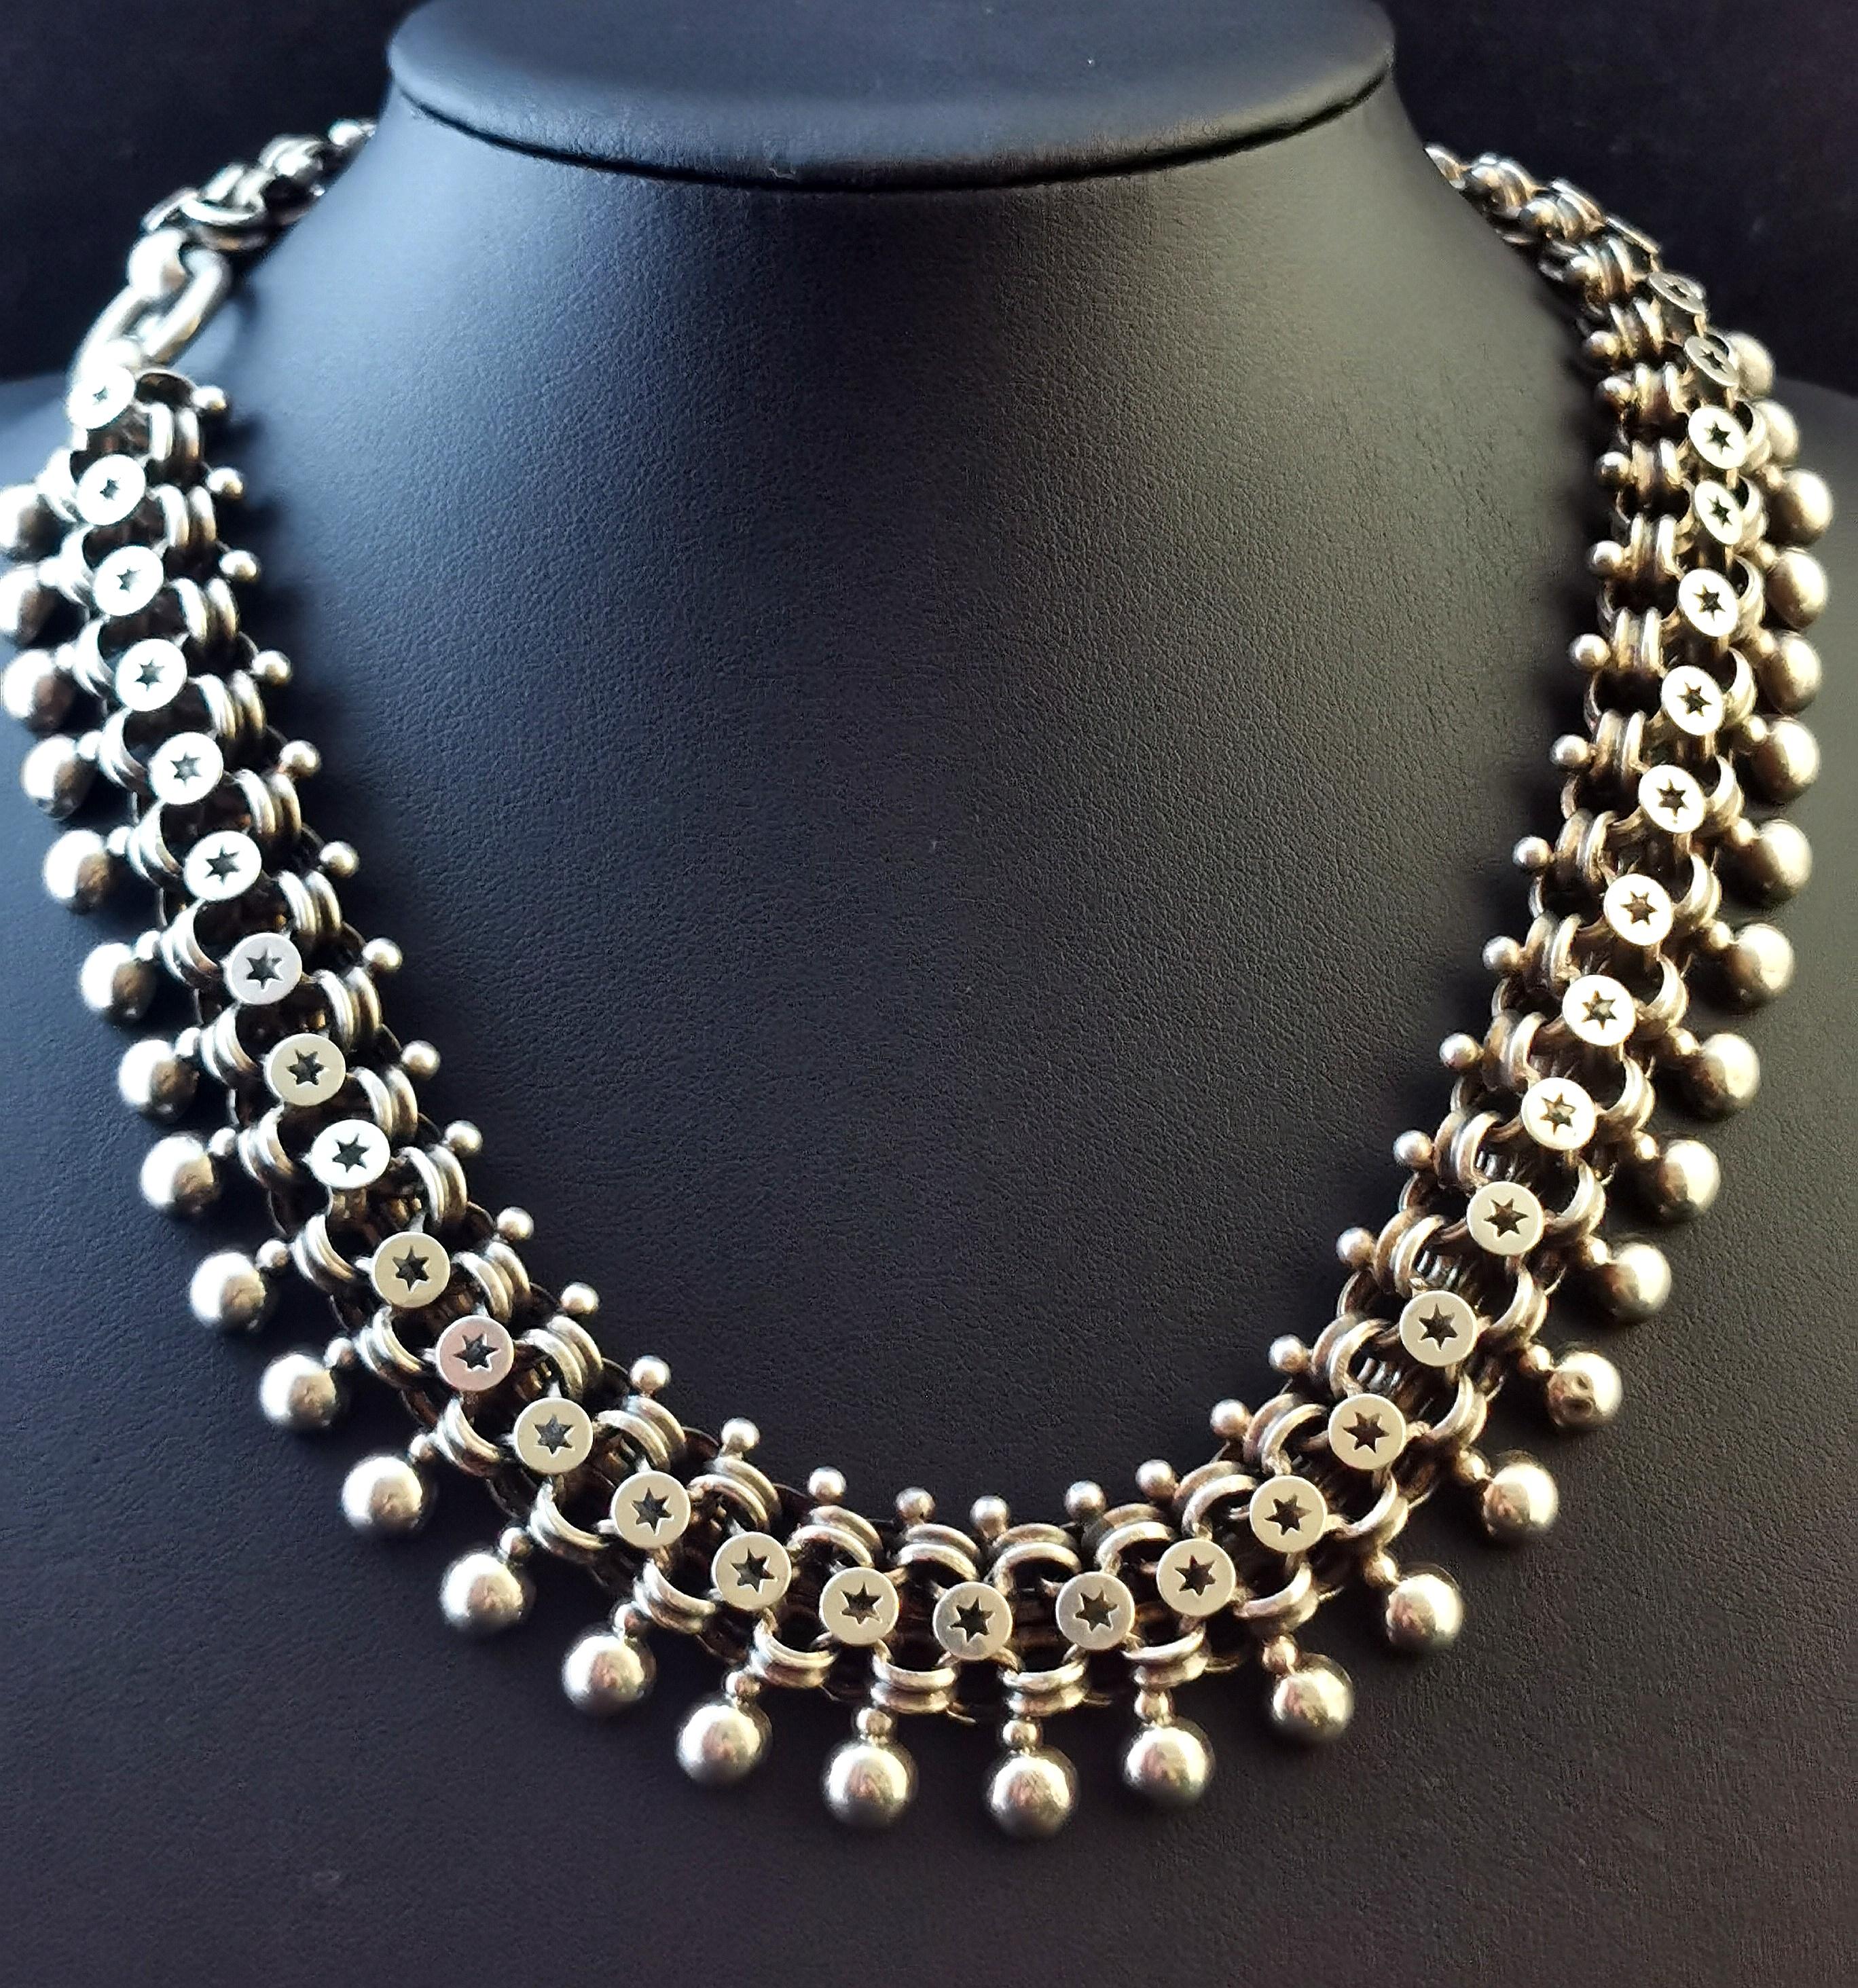 Antique Victorian Silver Collar Necklace, Pierced Links 6